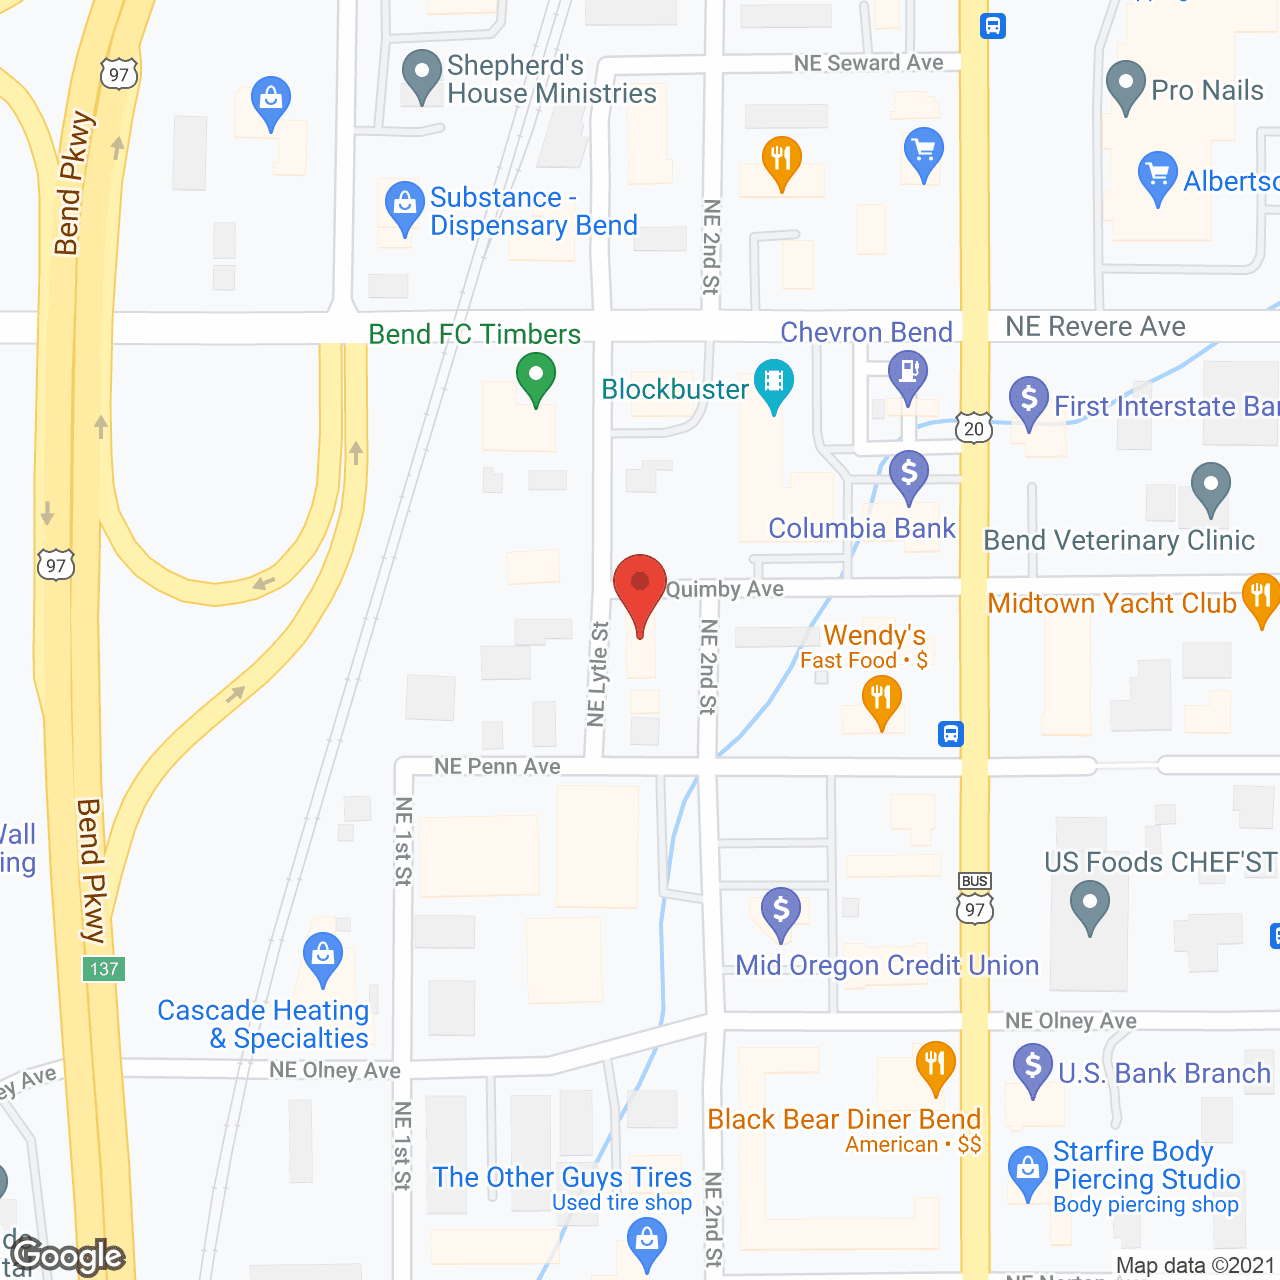 AHCG Bend in google map